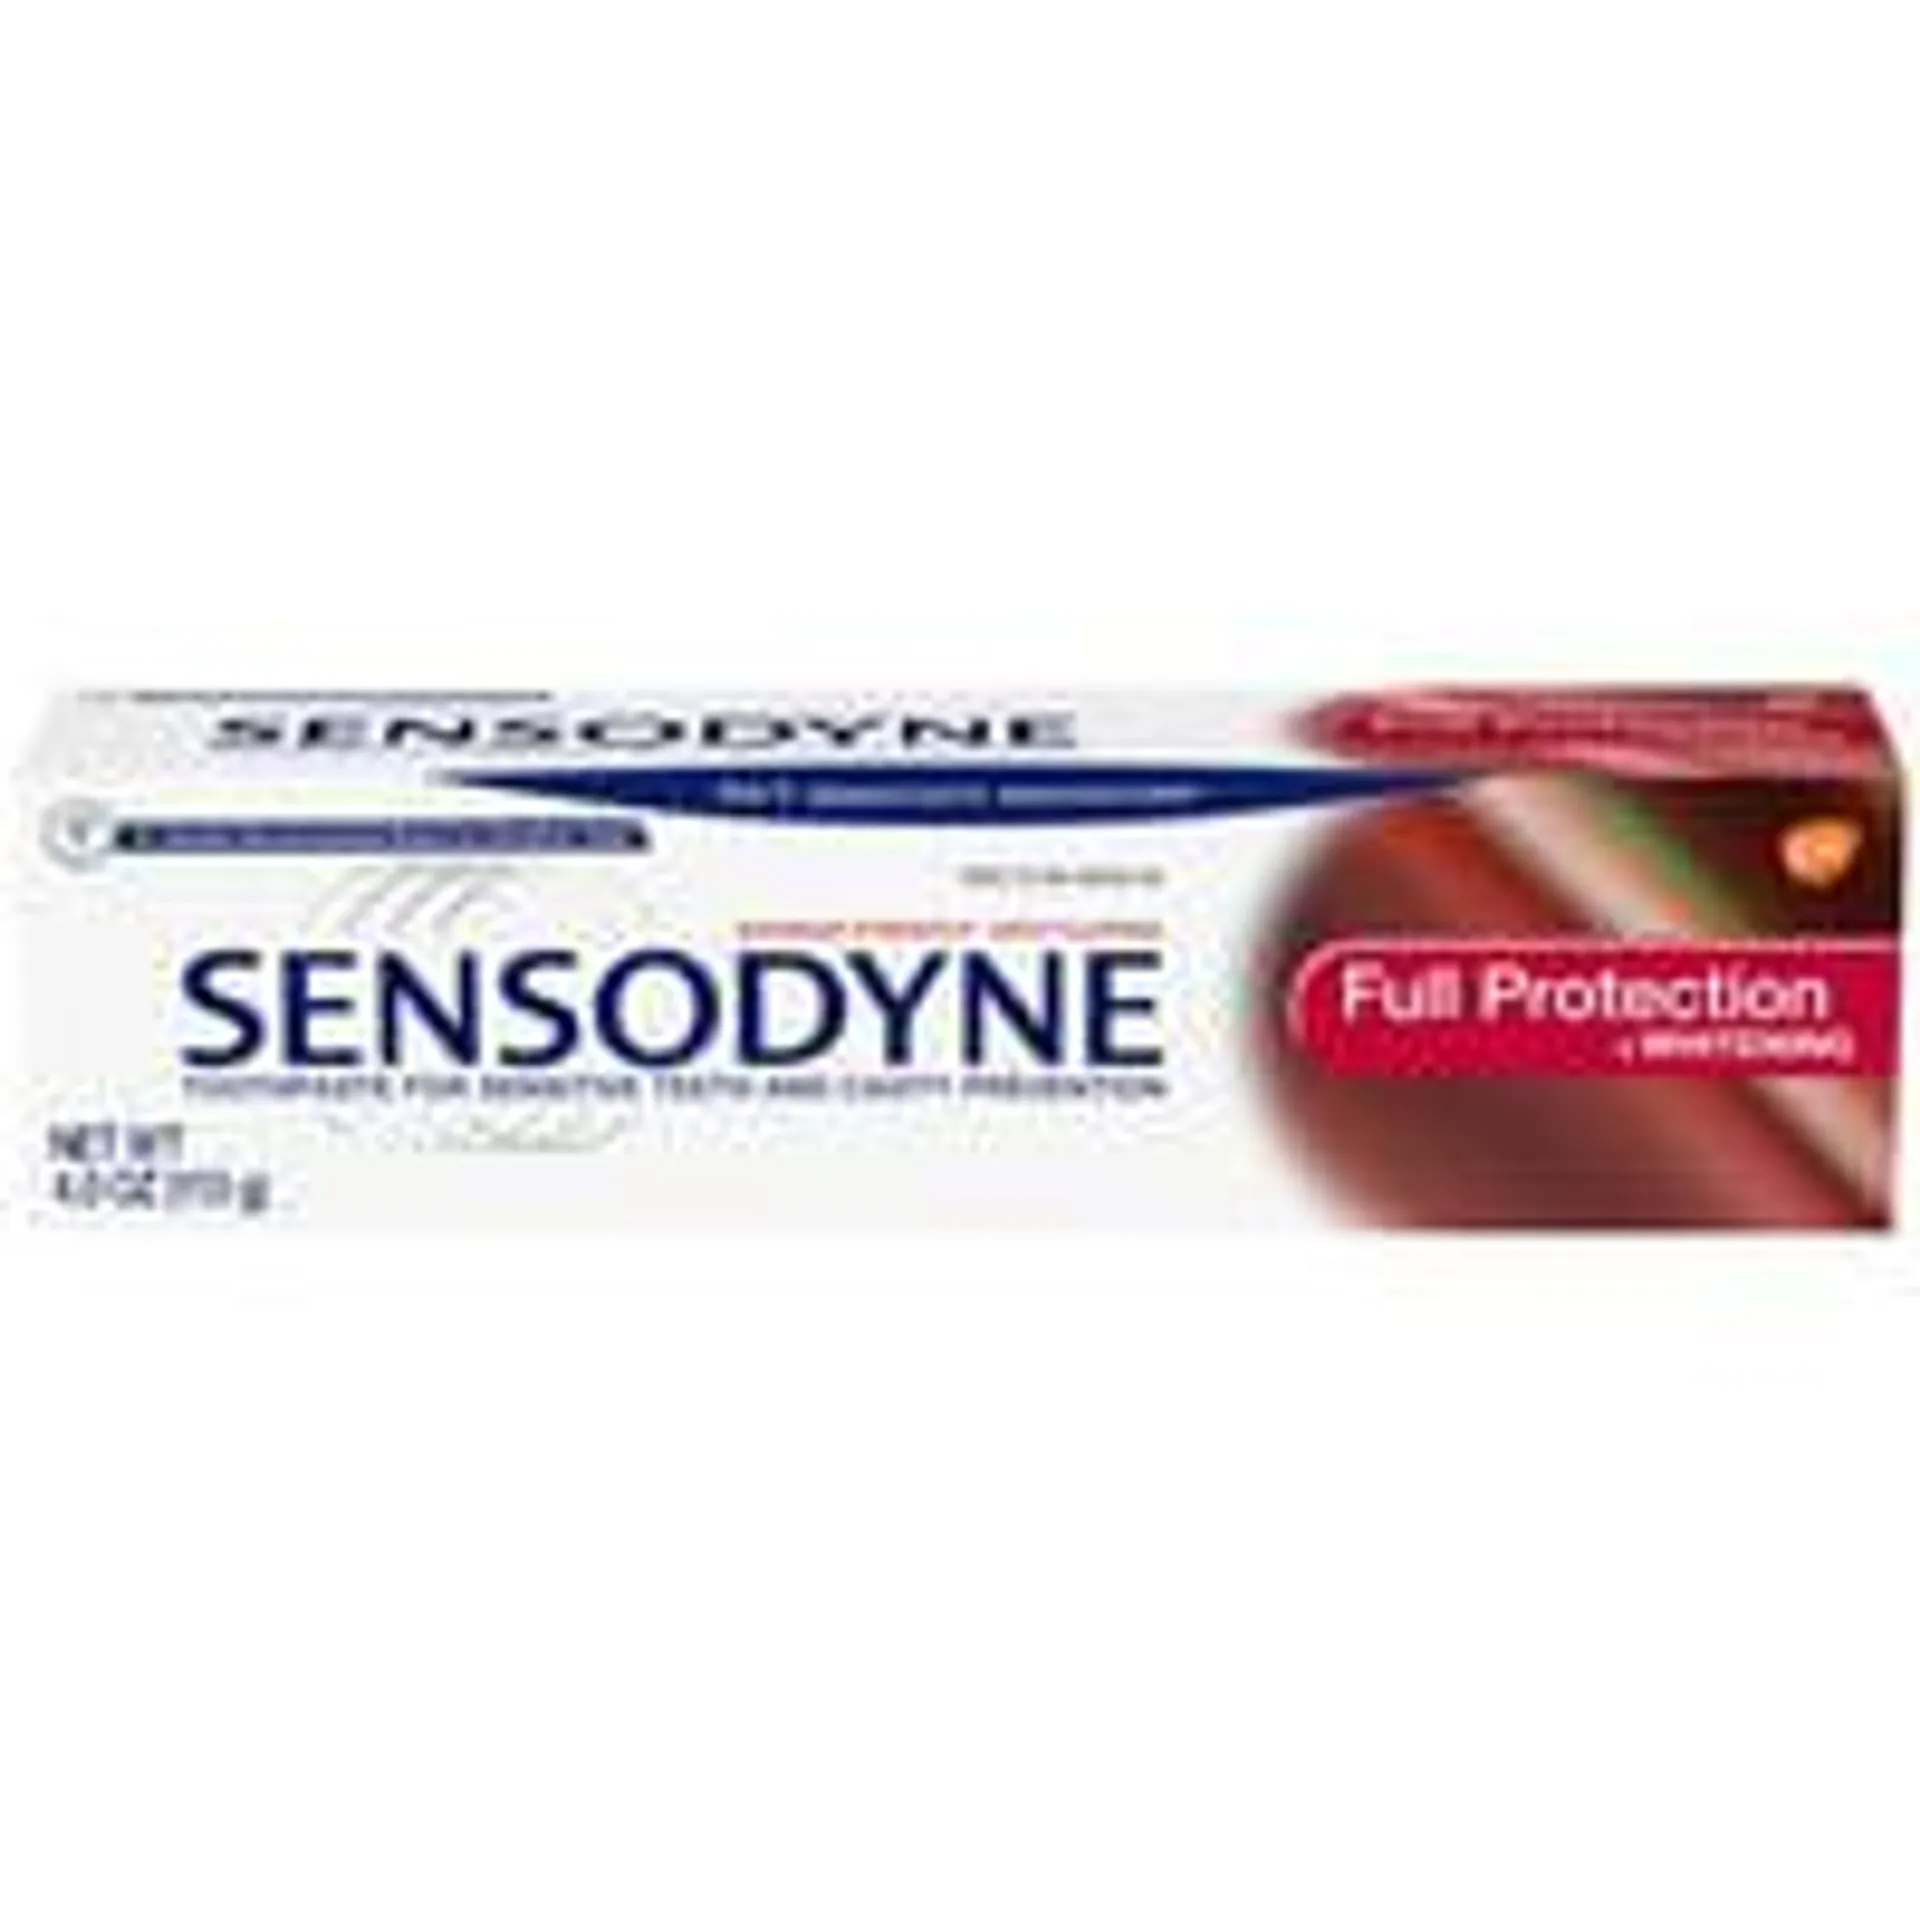 Sensodyne, Toothpaste, Full Protection + Whitening